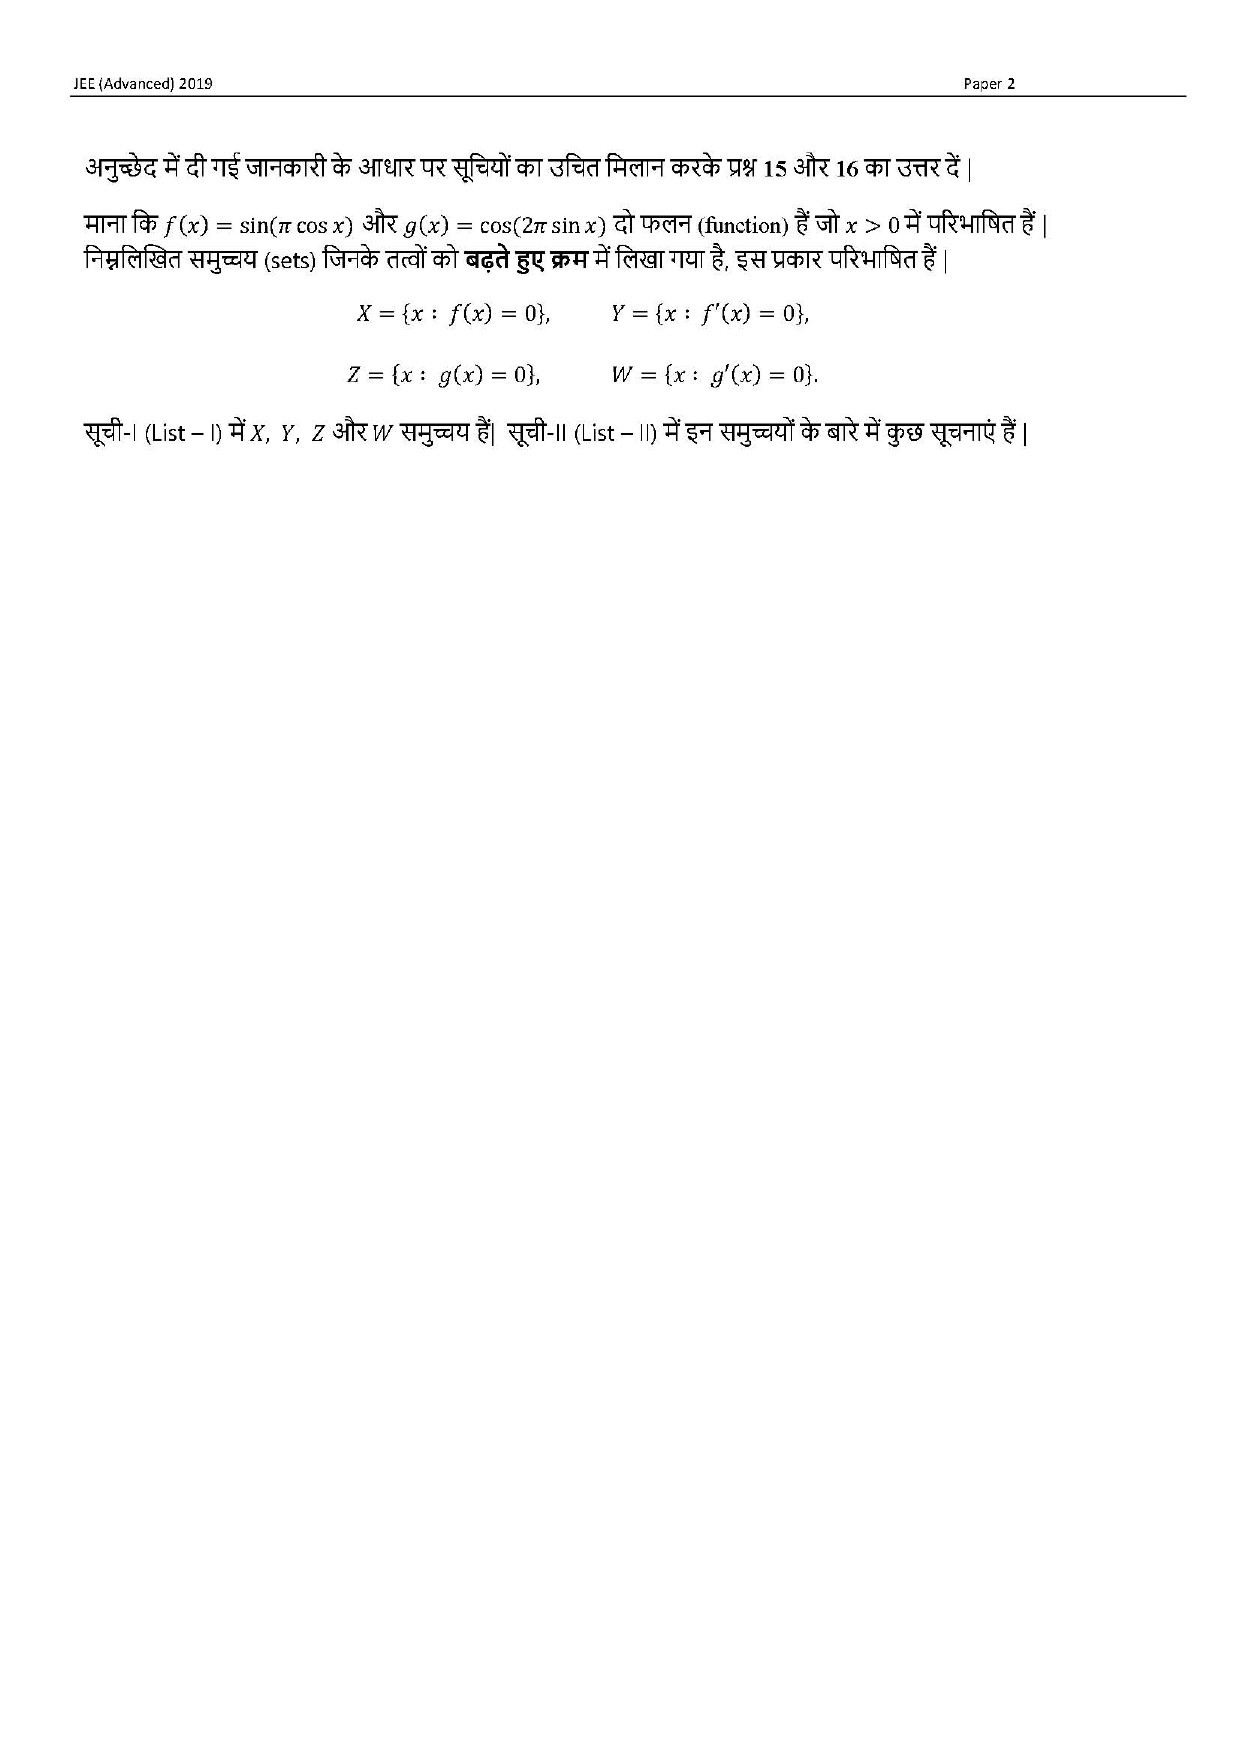 JEE Advanced Hindi Question Paper 2019 Paper 2 Mathematics 8